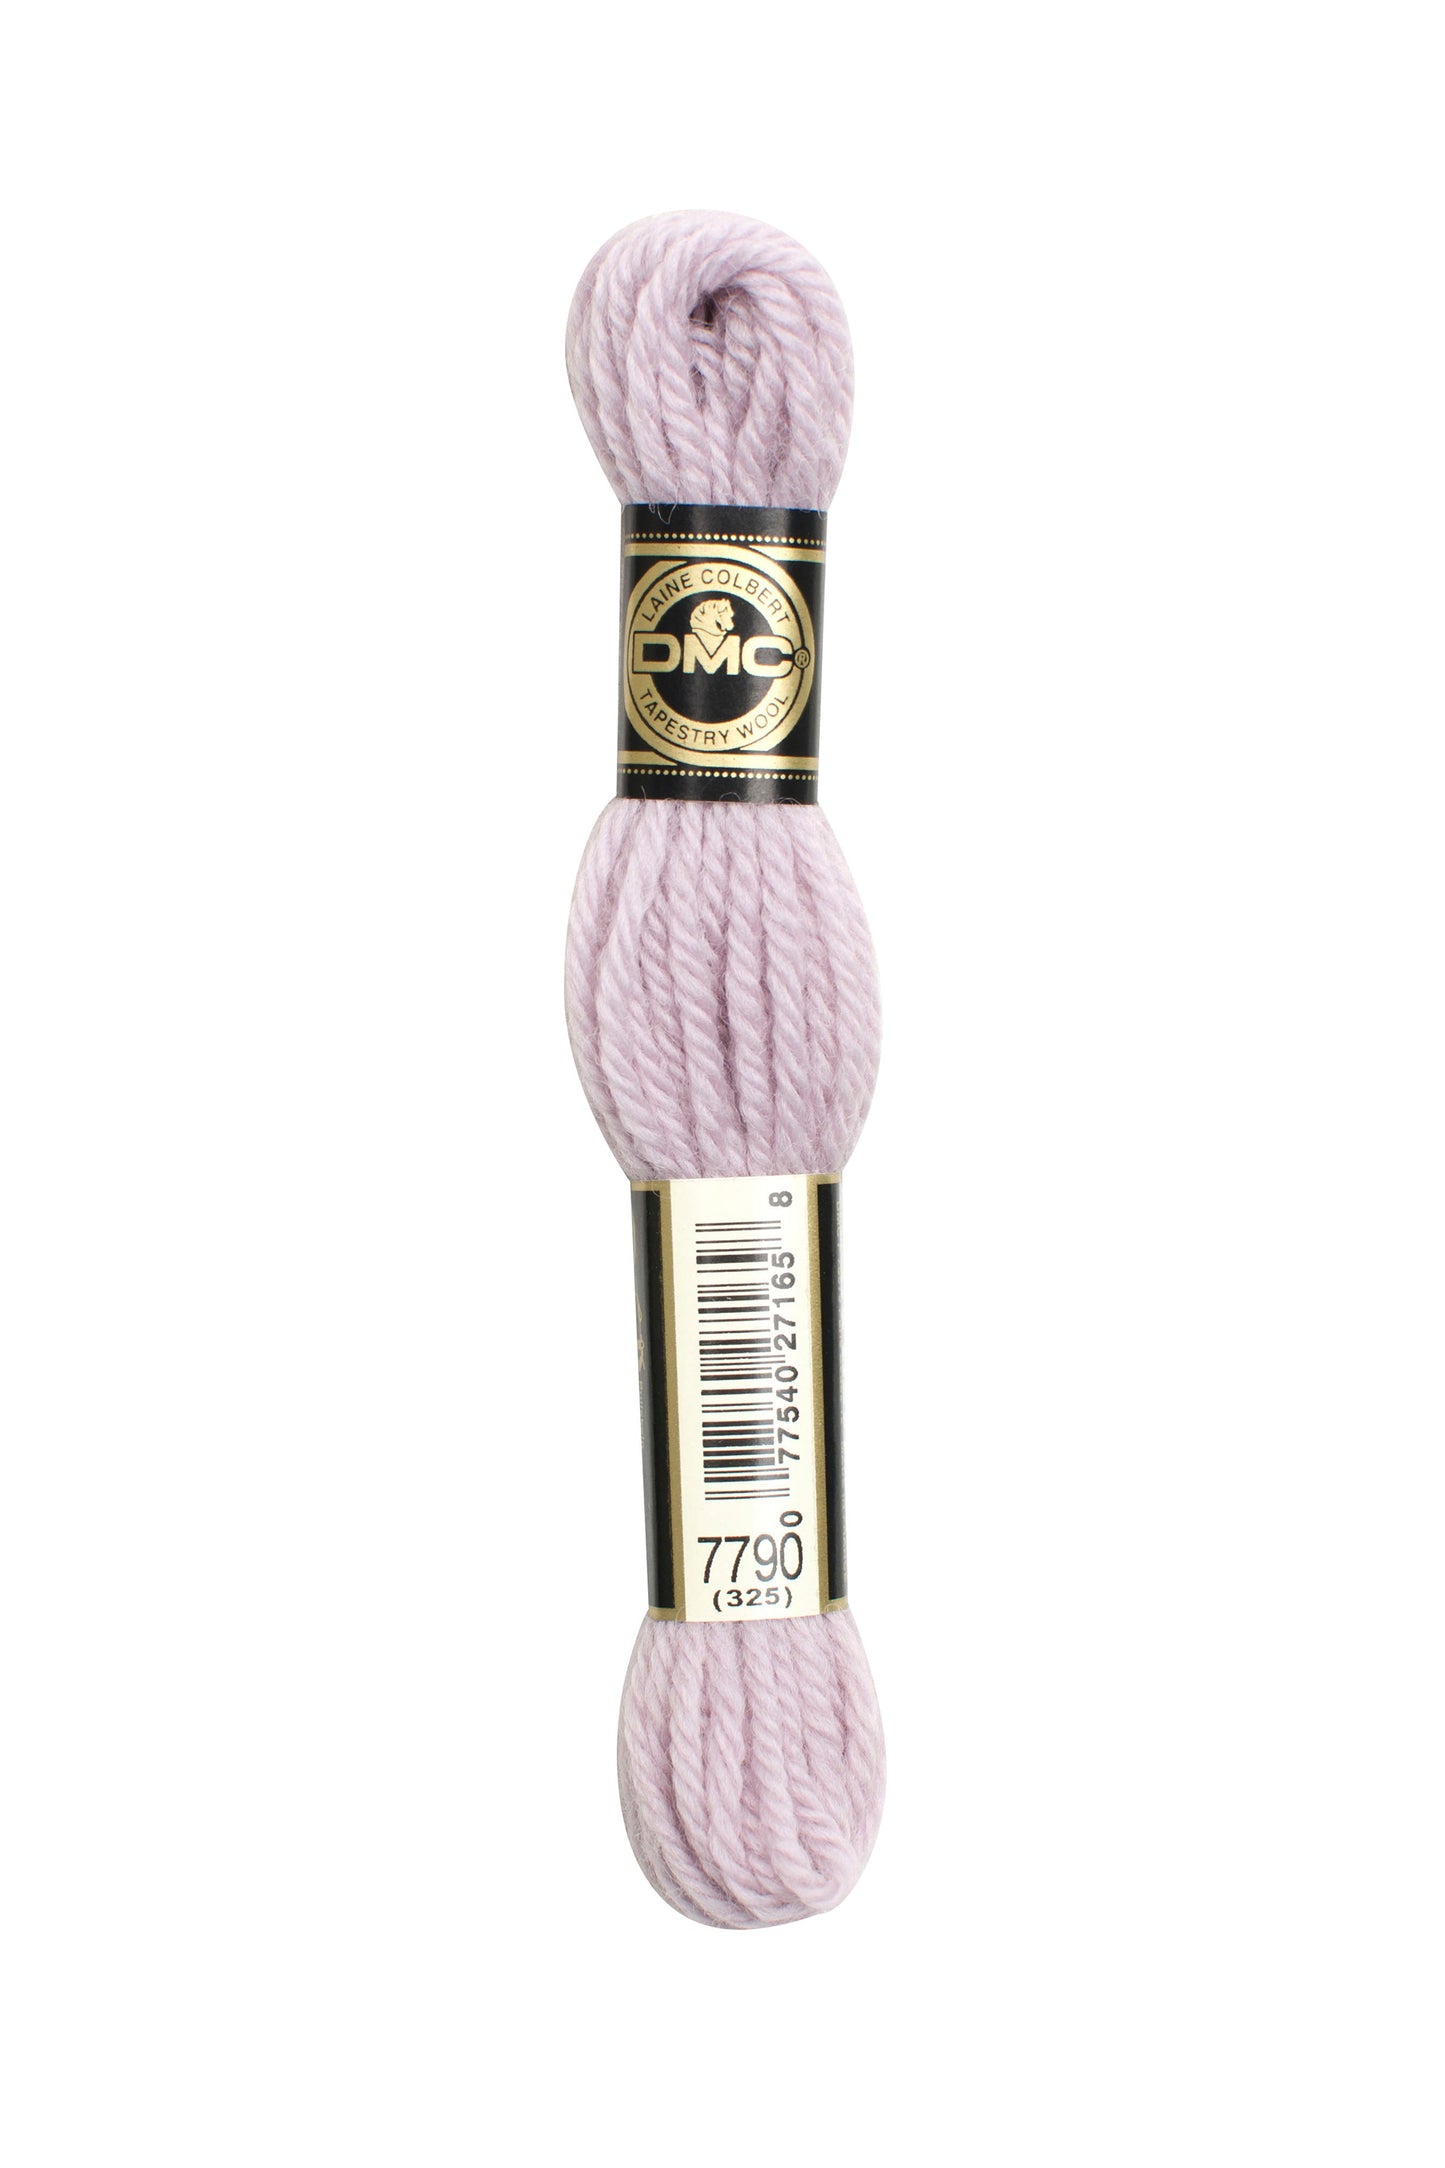 7790 – DMC Tapestry Wool